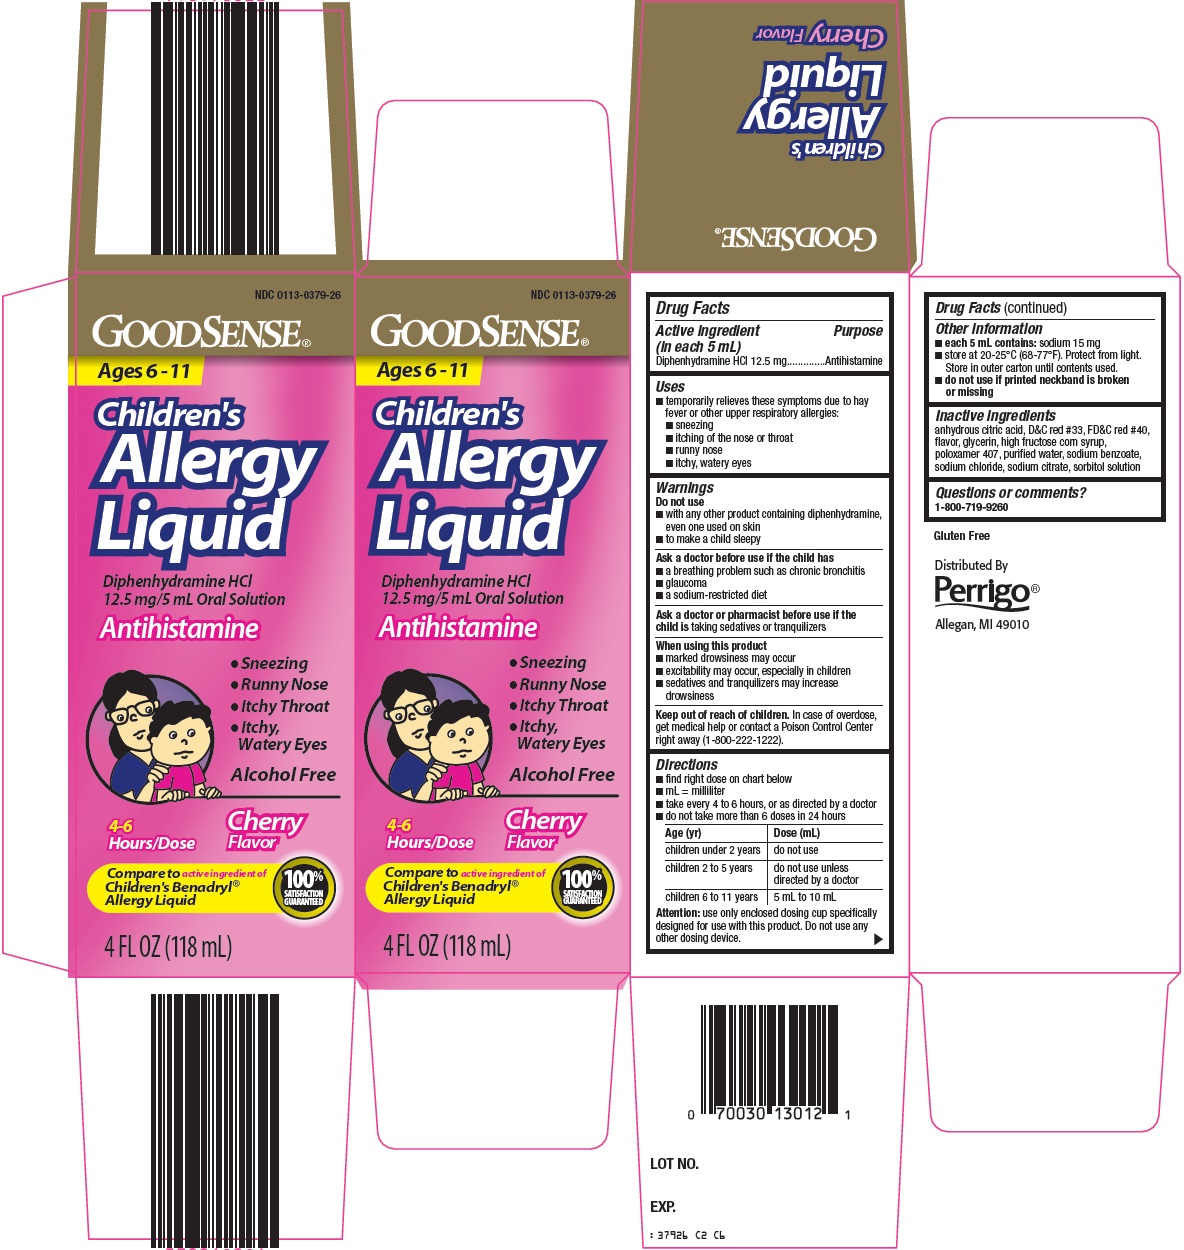 GoodSense Children's Allergy Liquid image